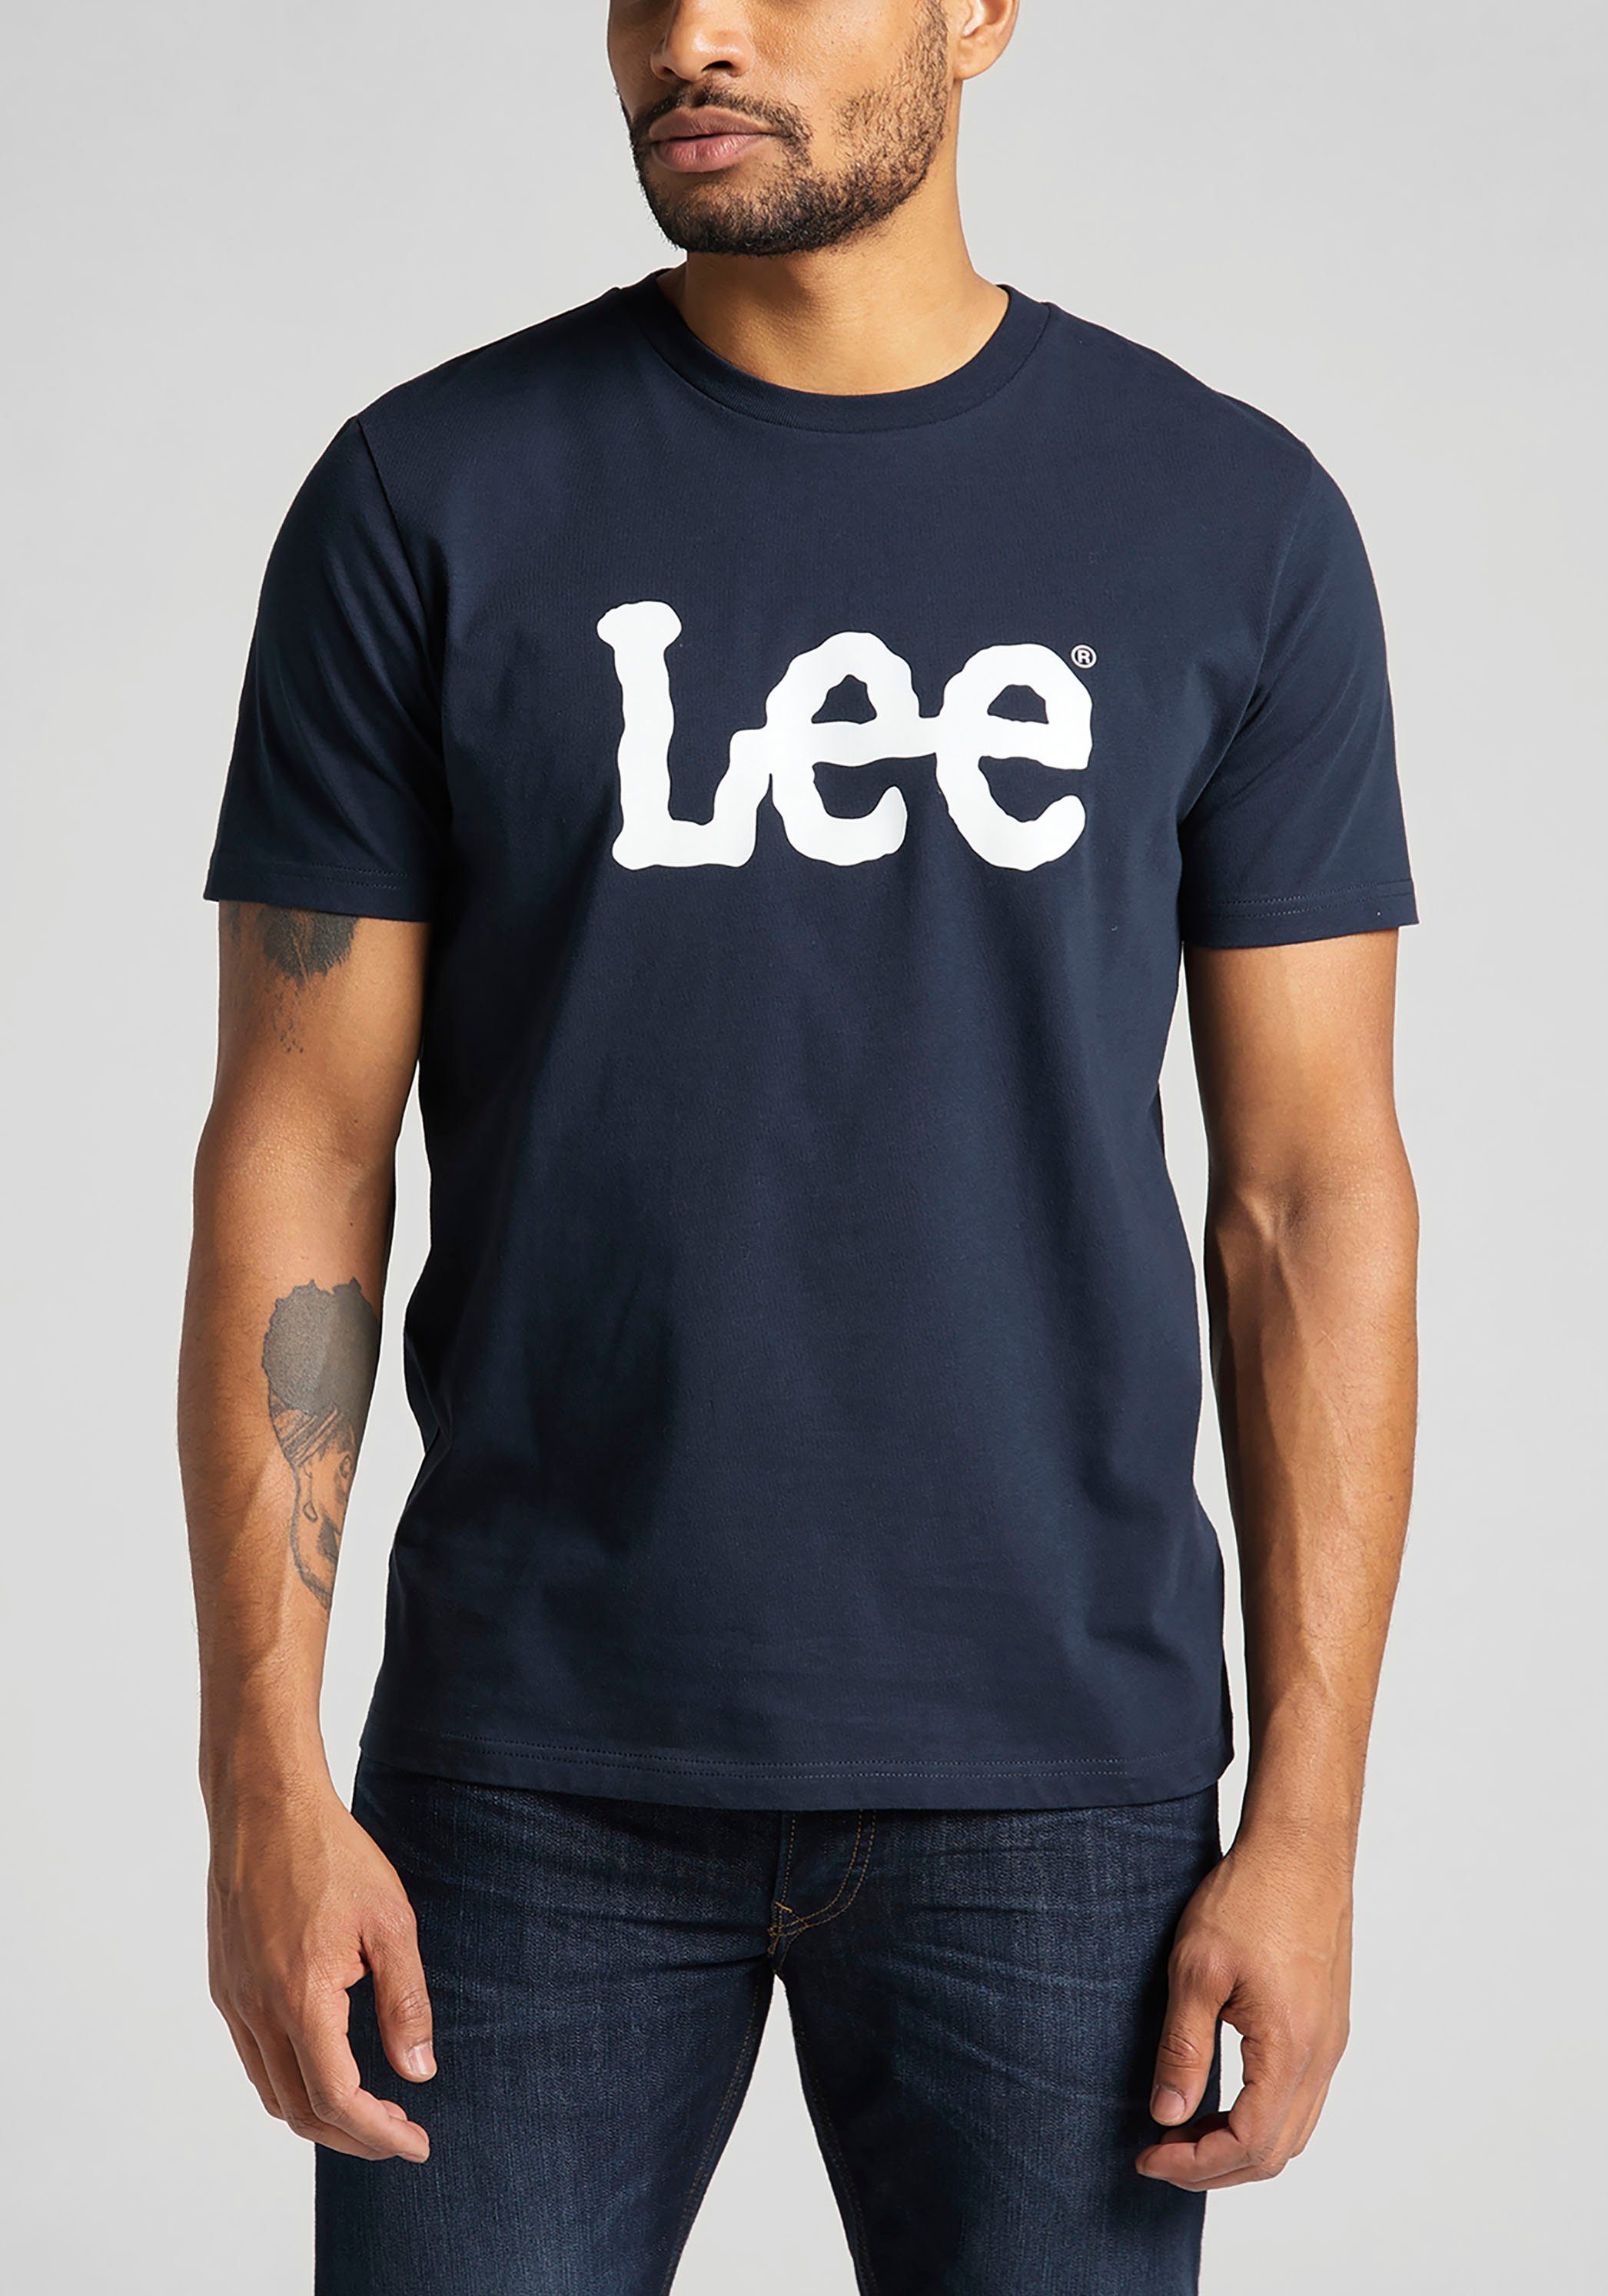 Lee® T-Shirt navy TEE LOGO drop Wobbly